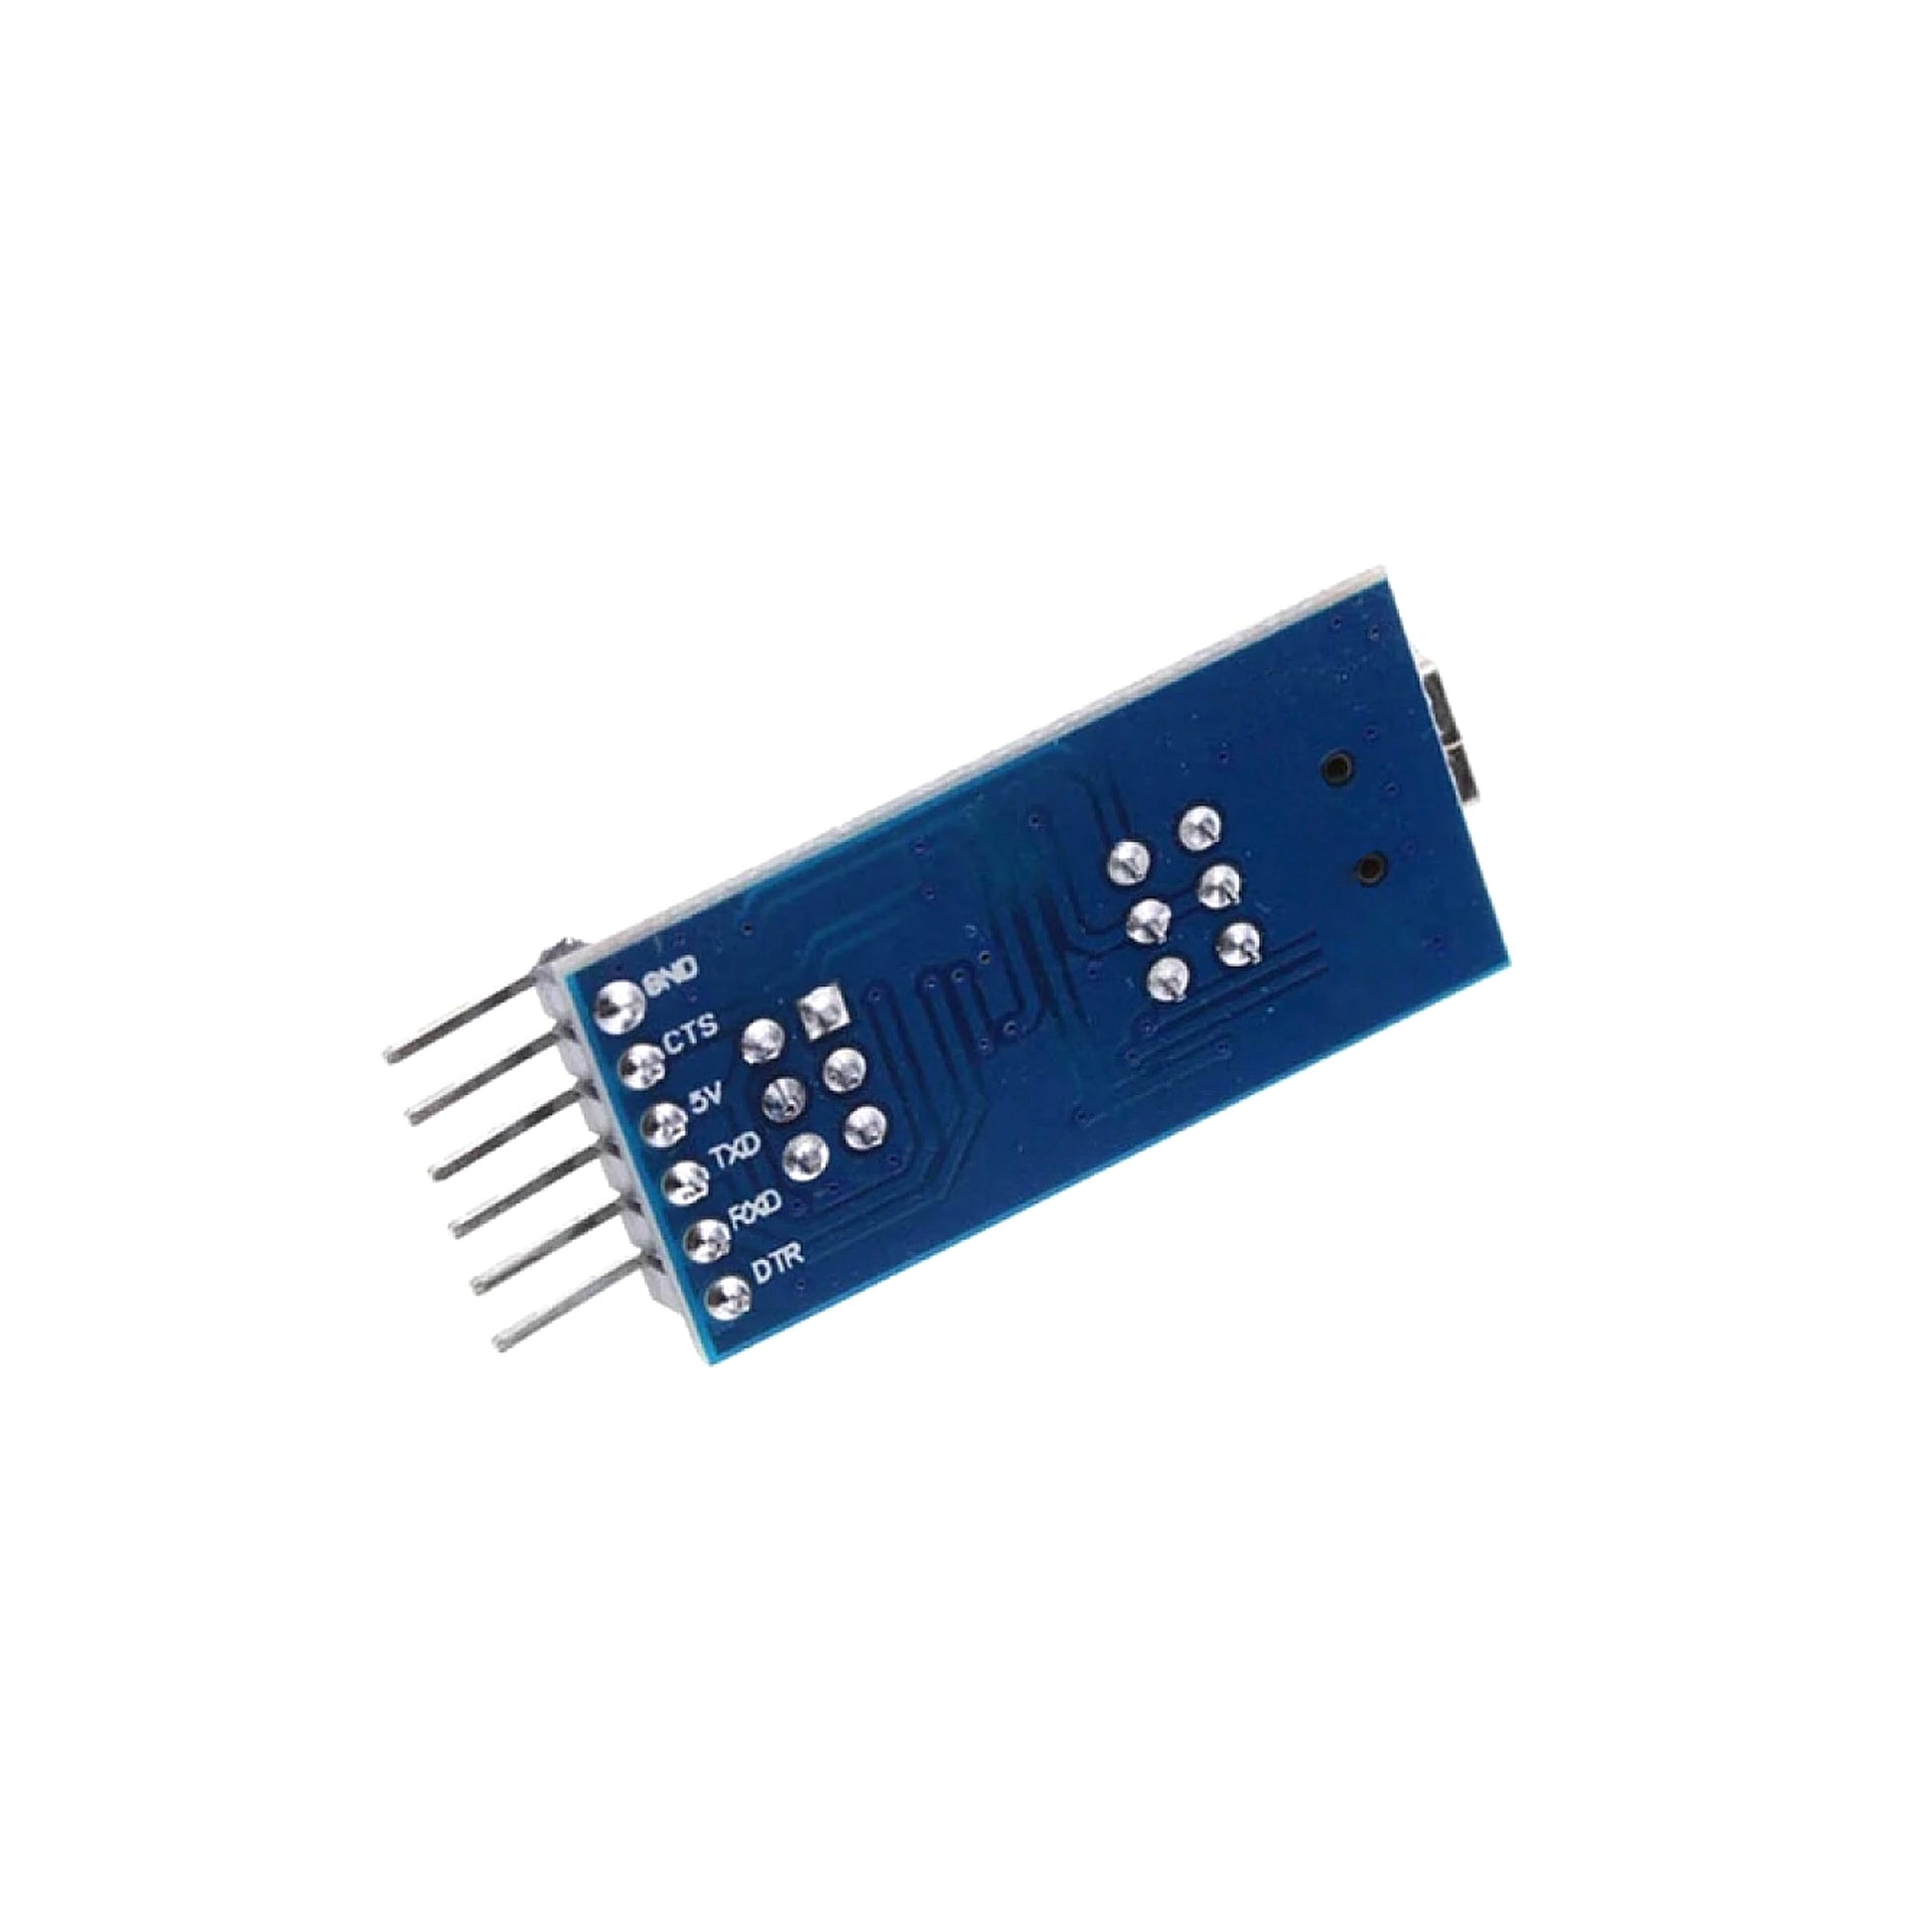 3.3-5V FT232RL FTDI USB to TTL Serial Adapter Module for Arduino Mini Port - RS281 - REES52